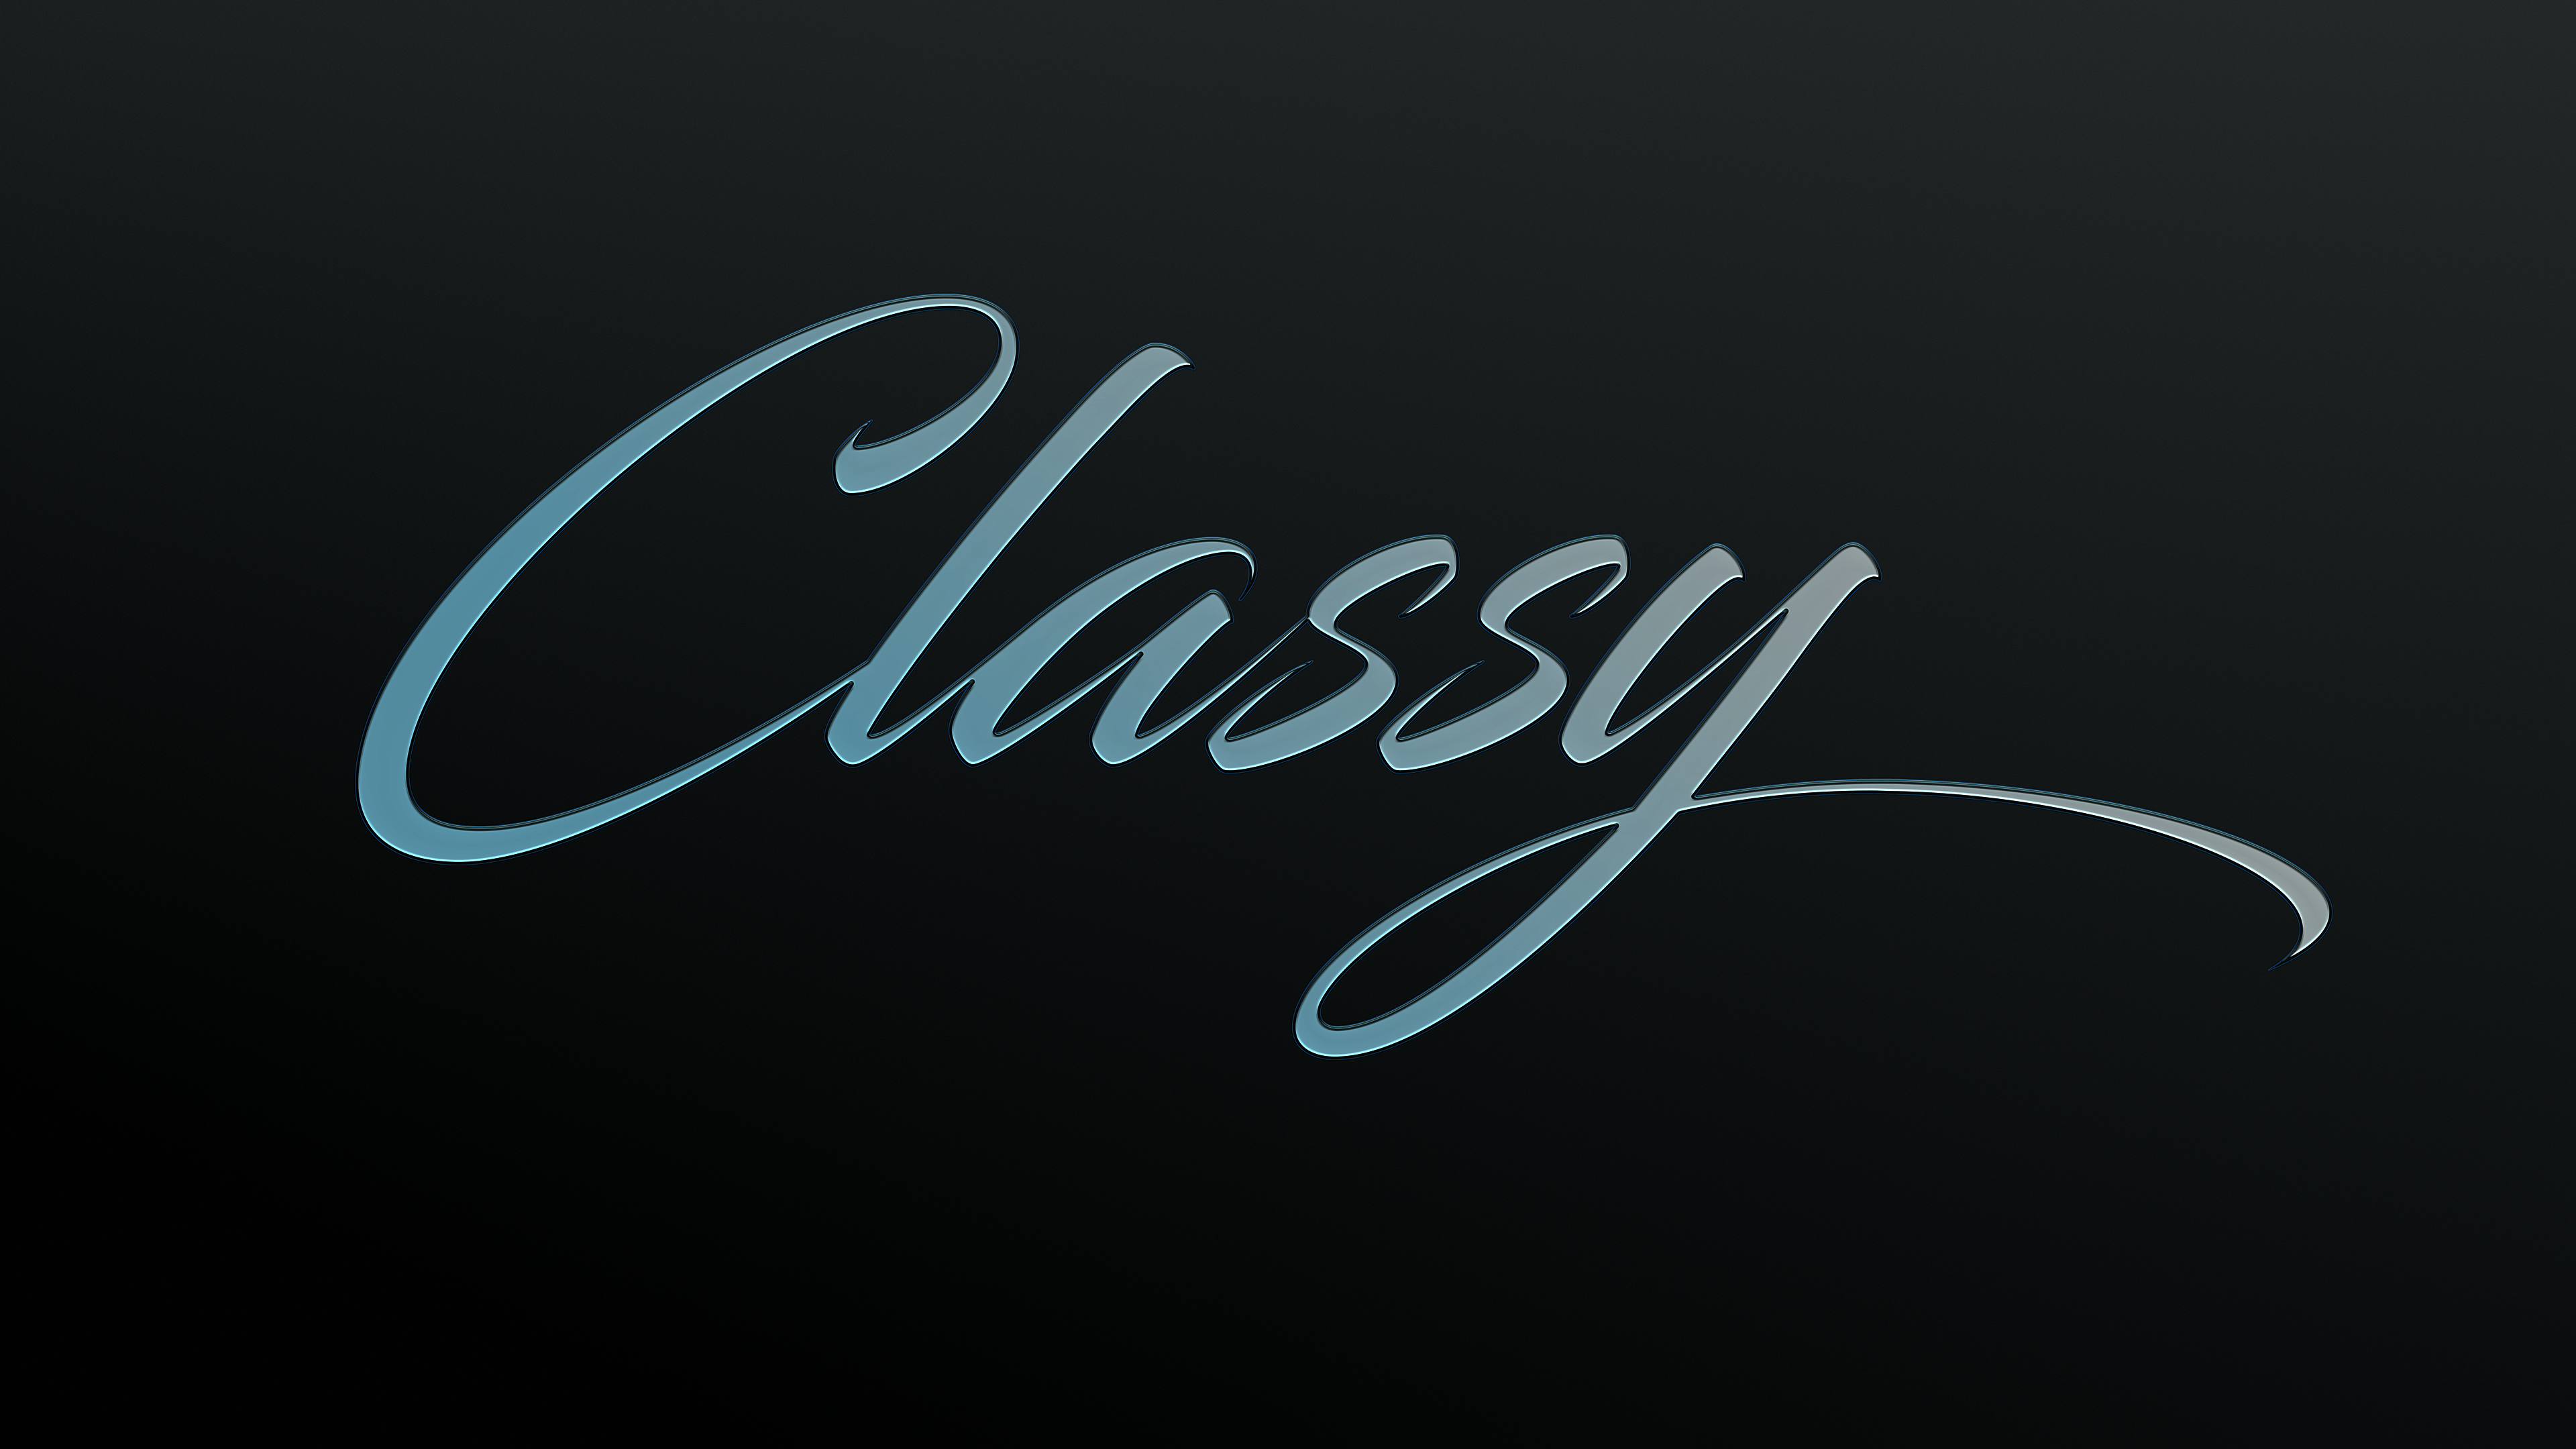 Classy Custom Typography 3840x2160